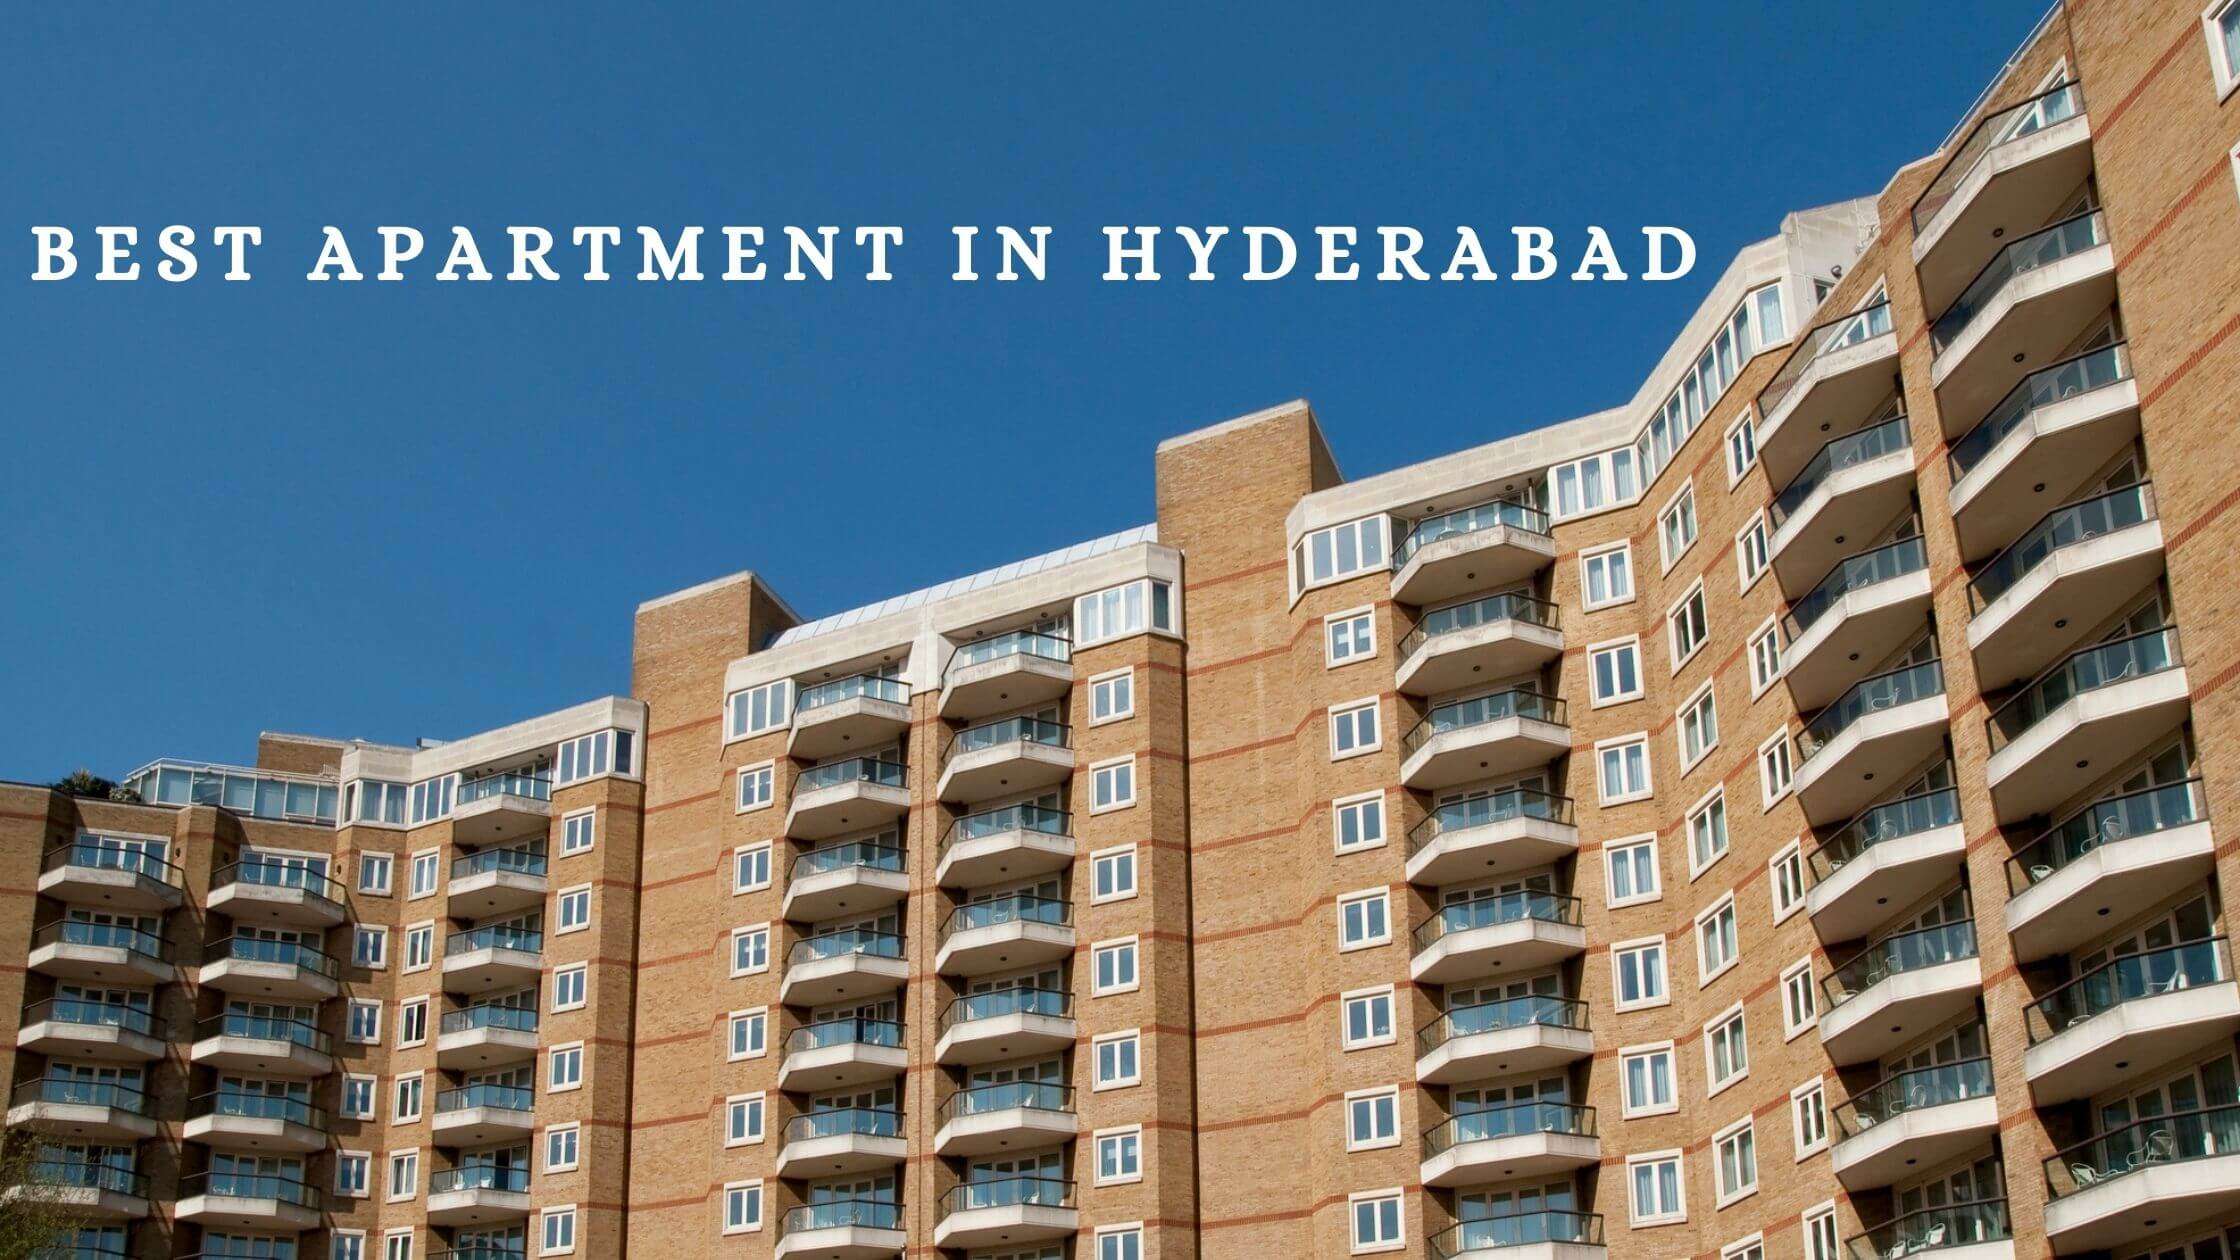 Best Apartment in Hyderabad